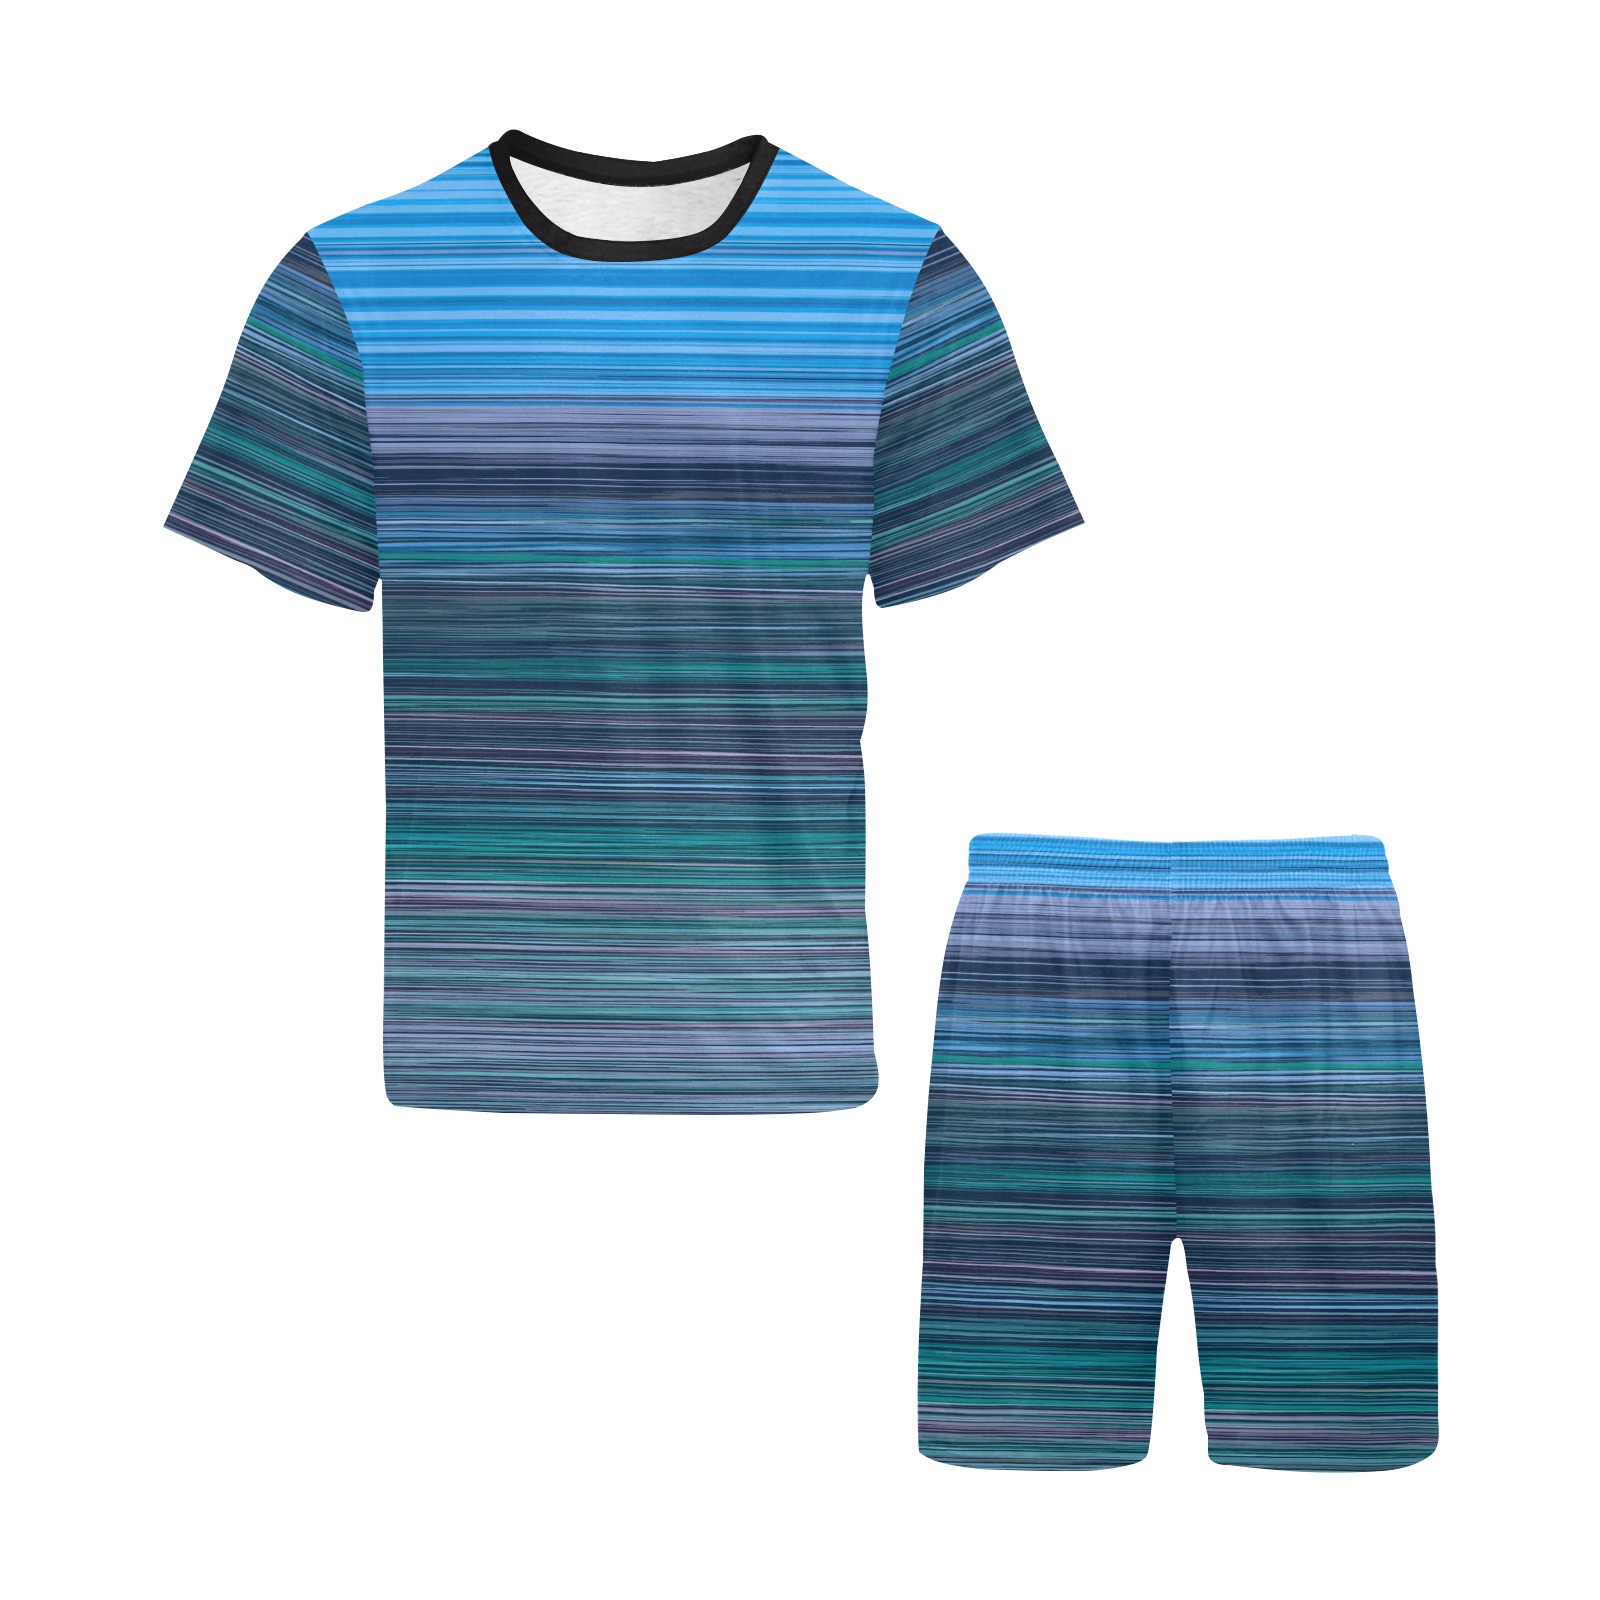 Abstract Blue Horizontal Stripes Men's Short Pajama Set